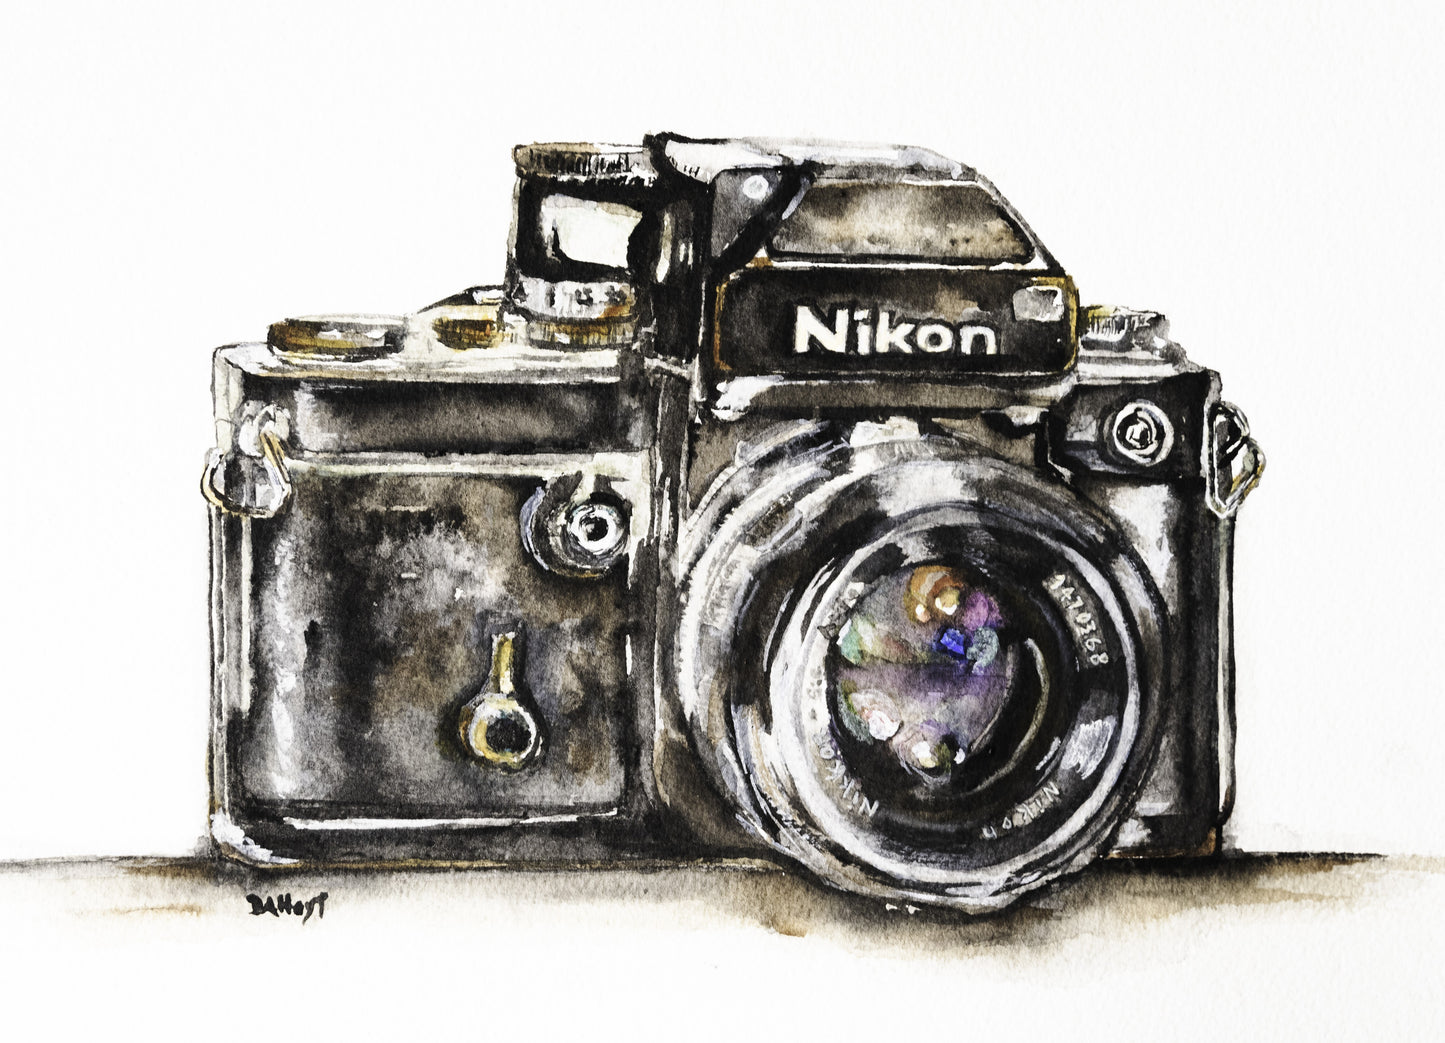 Vintage Nikon Camera- Greeting Card or Notecard Set